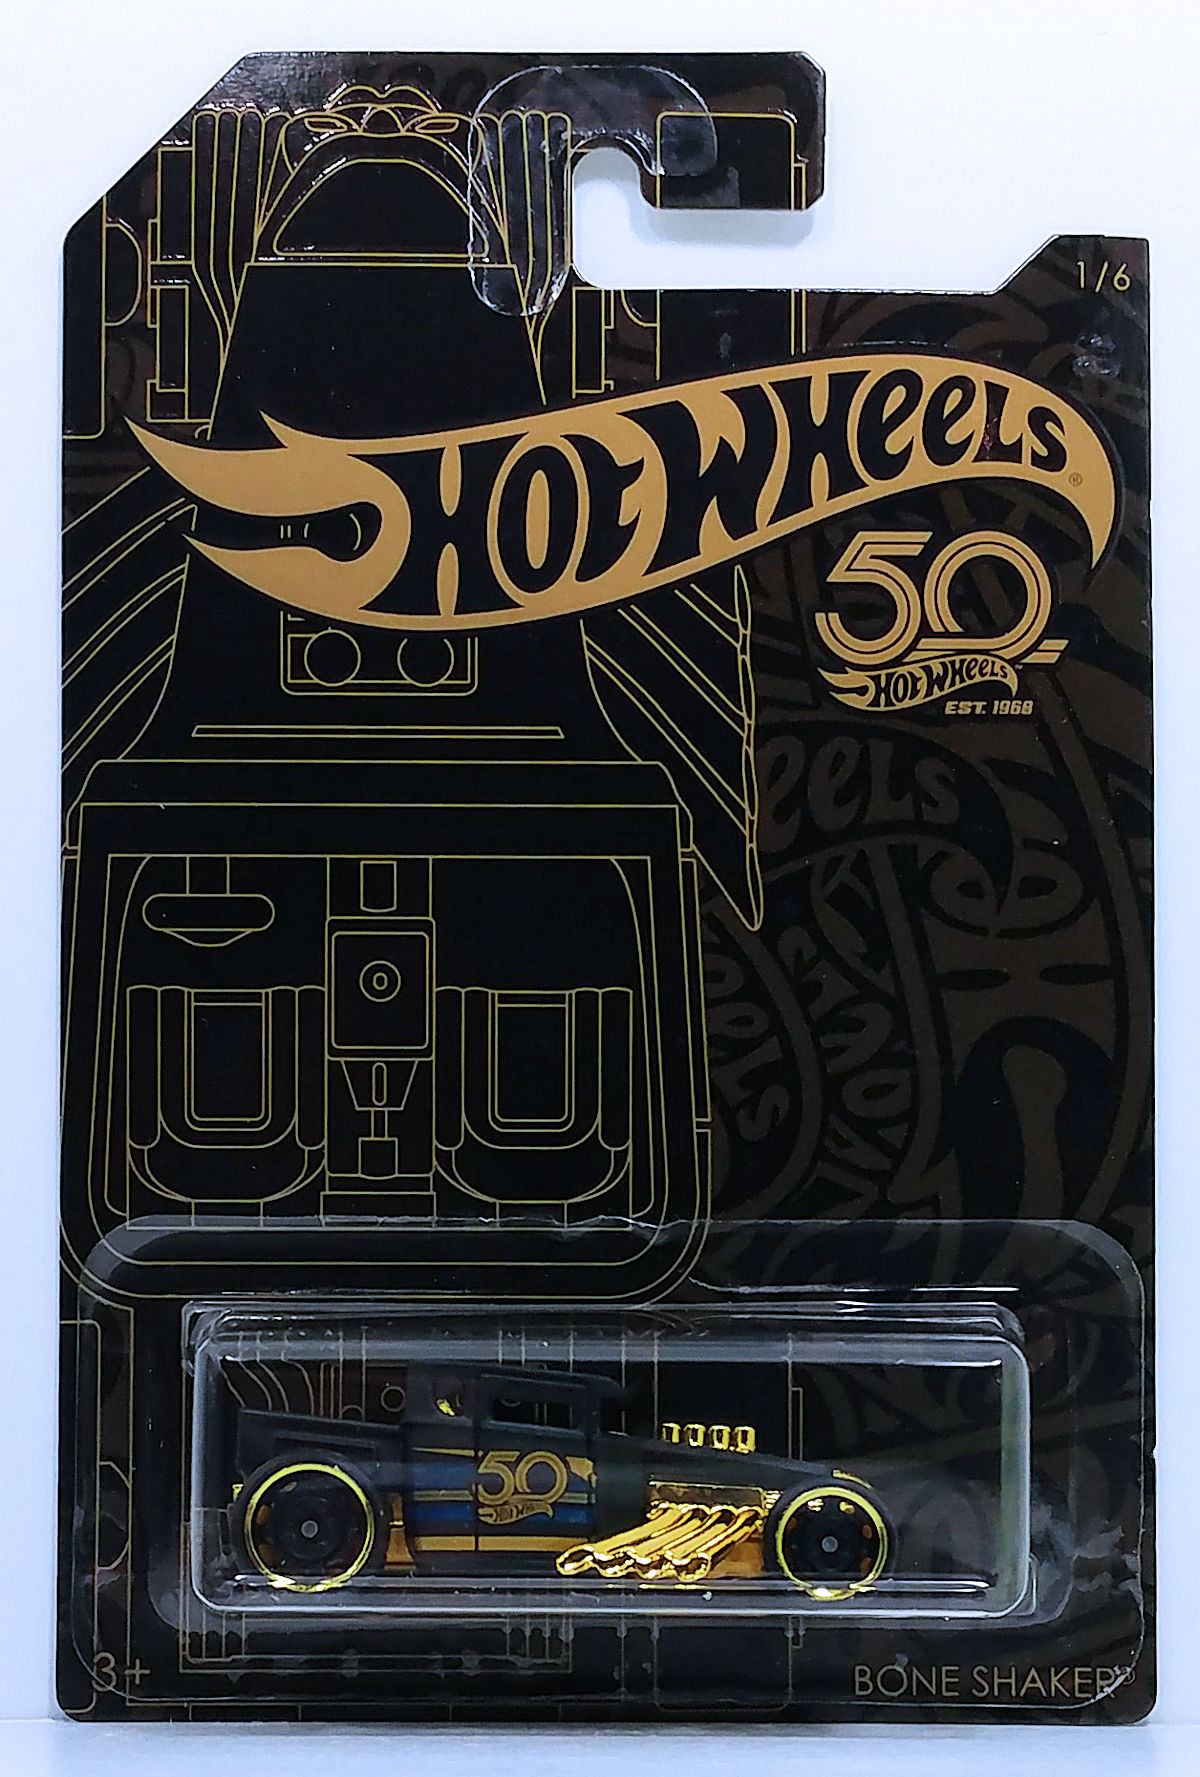 Error Print 2018 Hot Wheels 50th Anniversary Black and Gold #1/6 Bone Shaker 